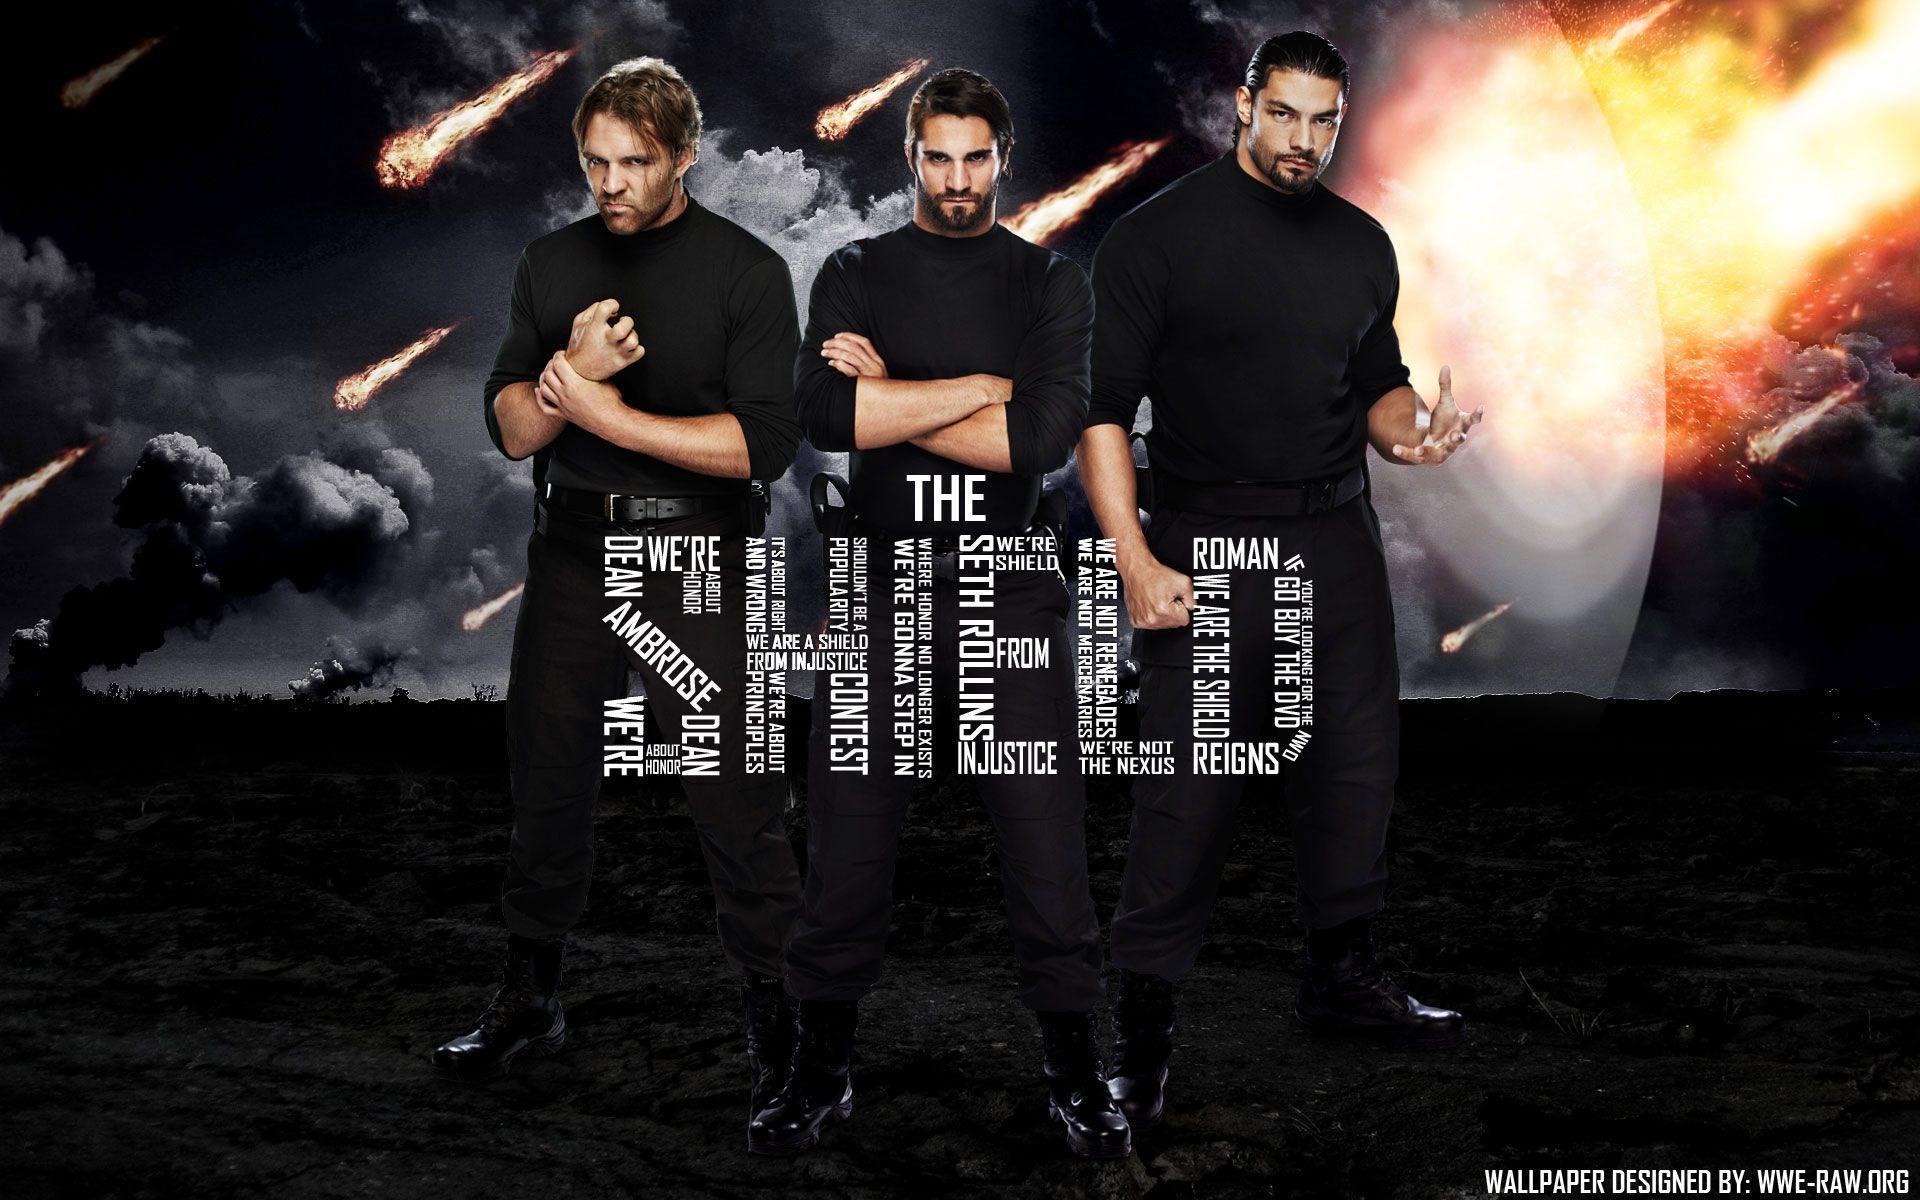 wwe superstars image the shield. The Shield Wallpaper. wwe